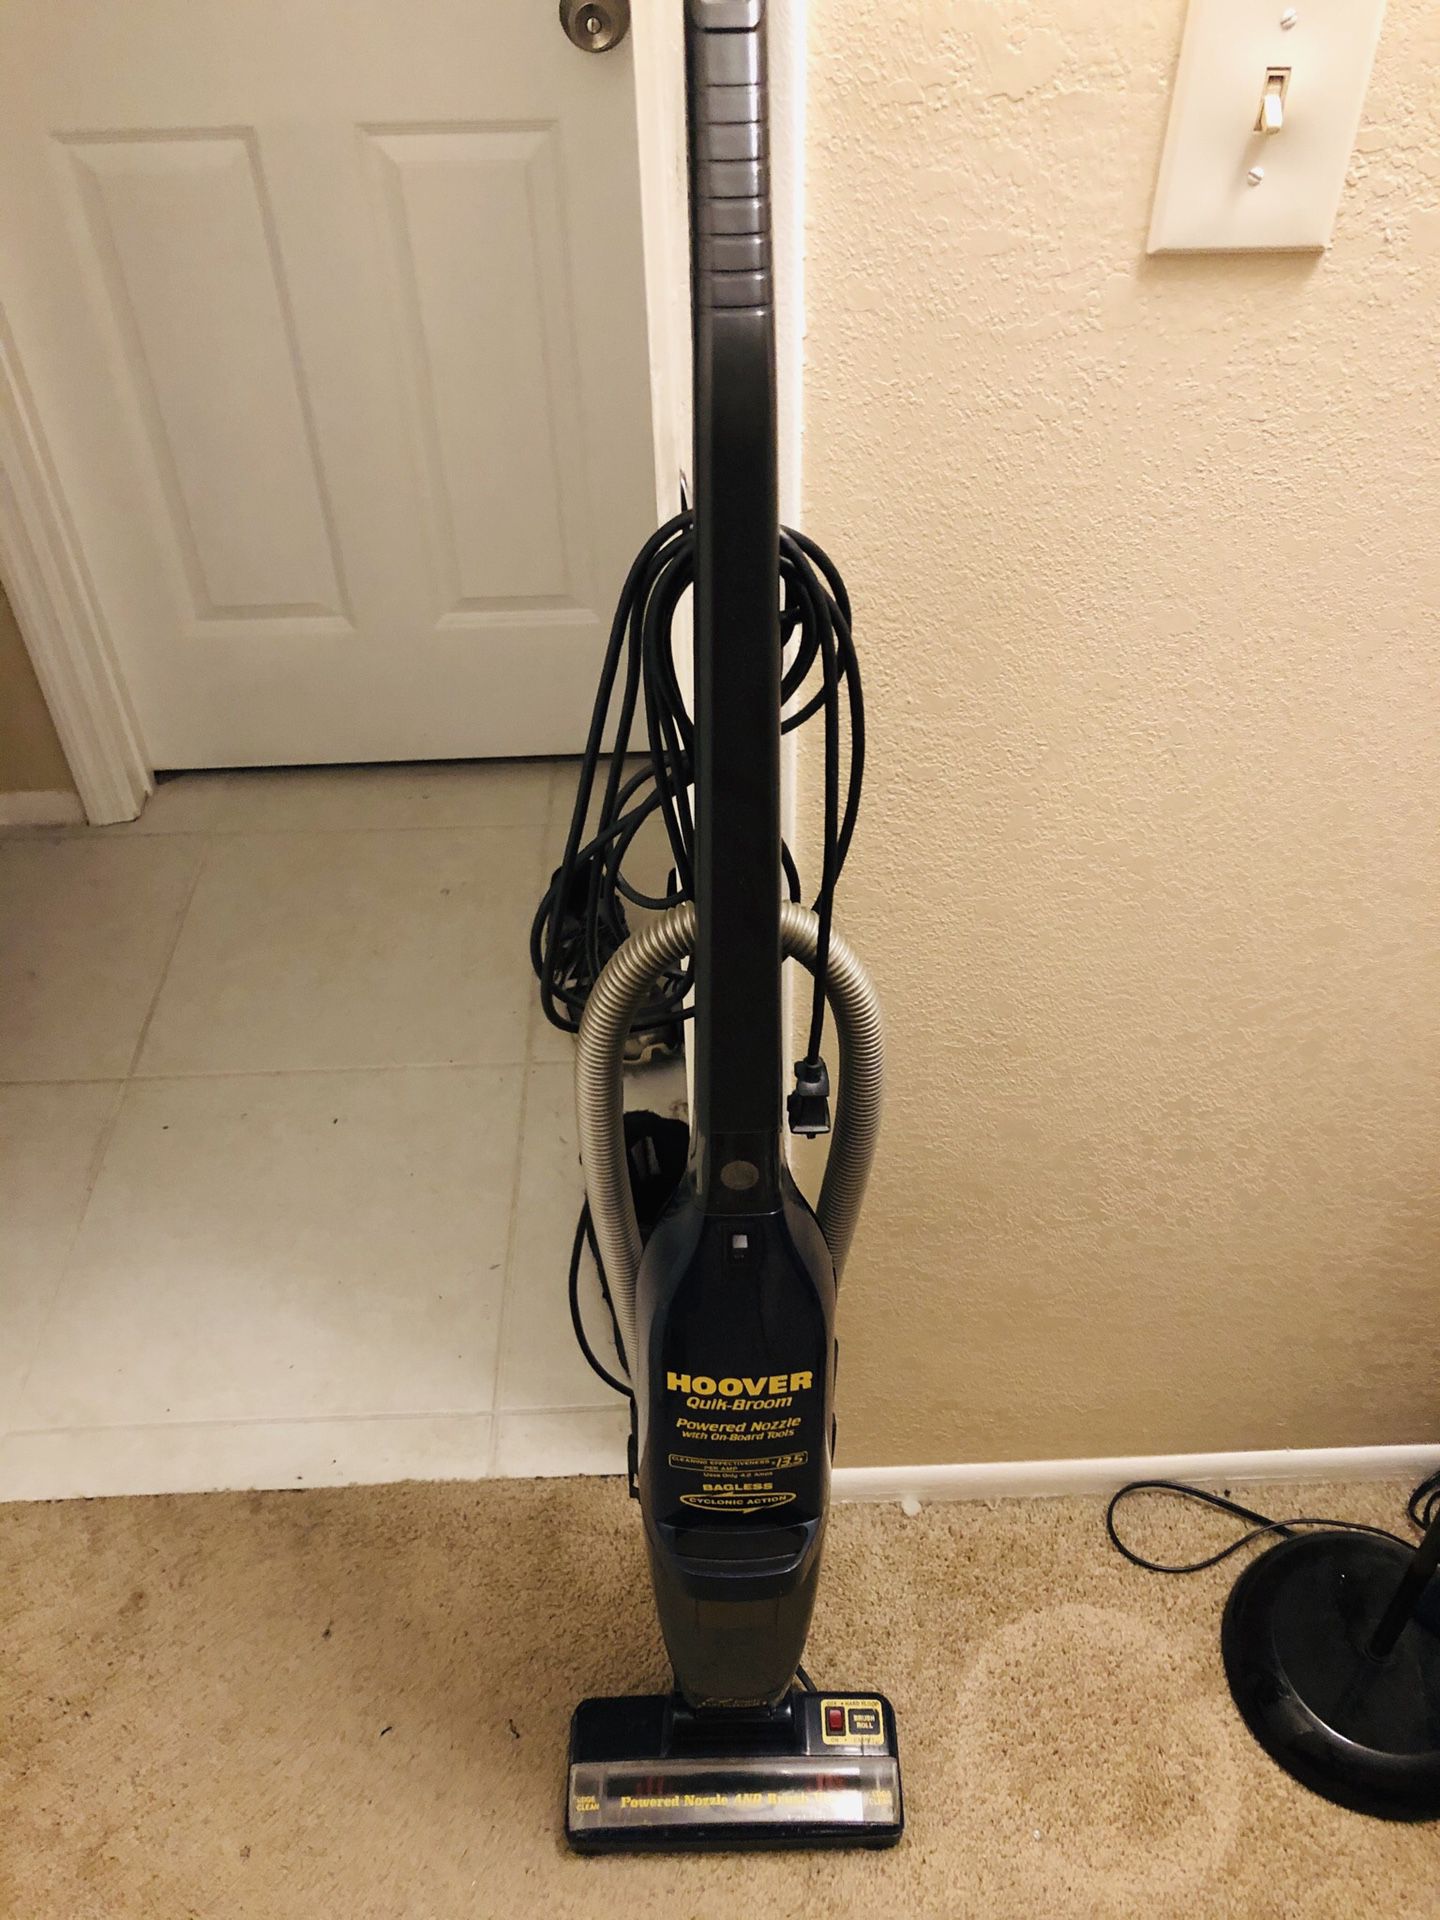 Hover vacuum cleaner